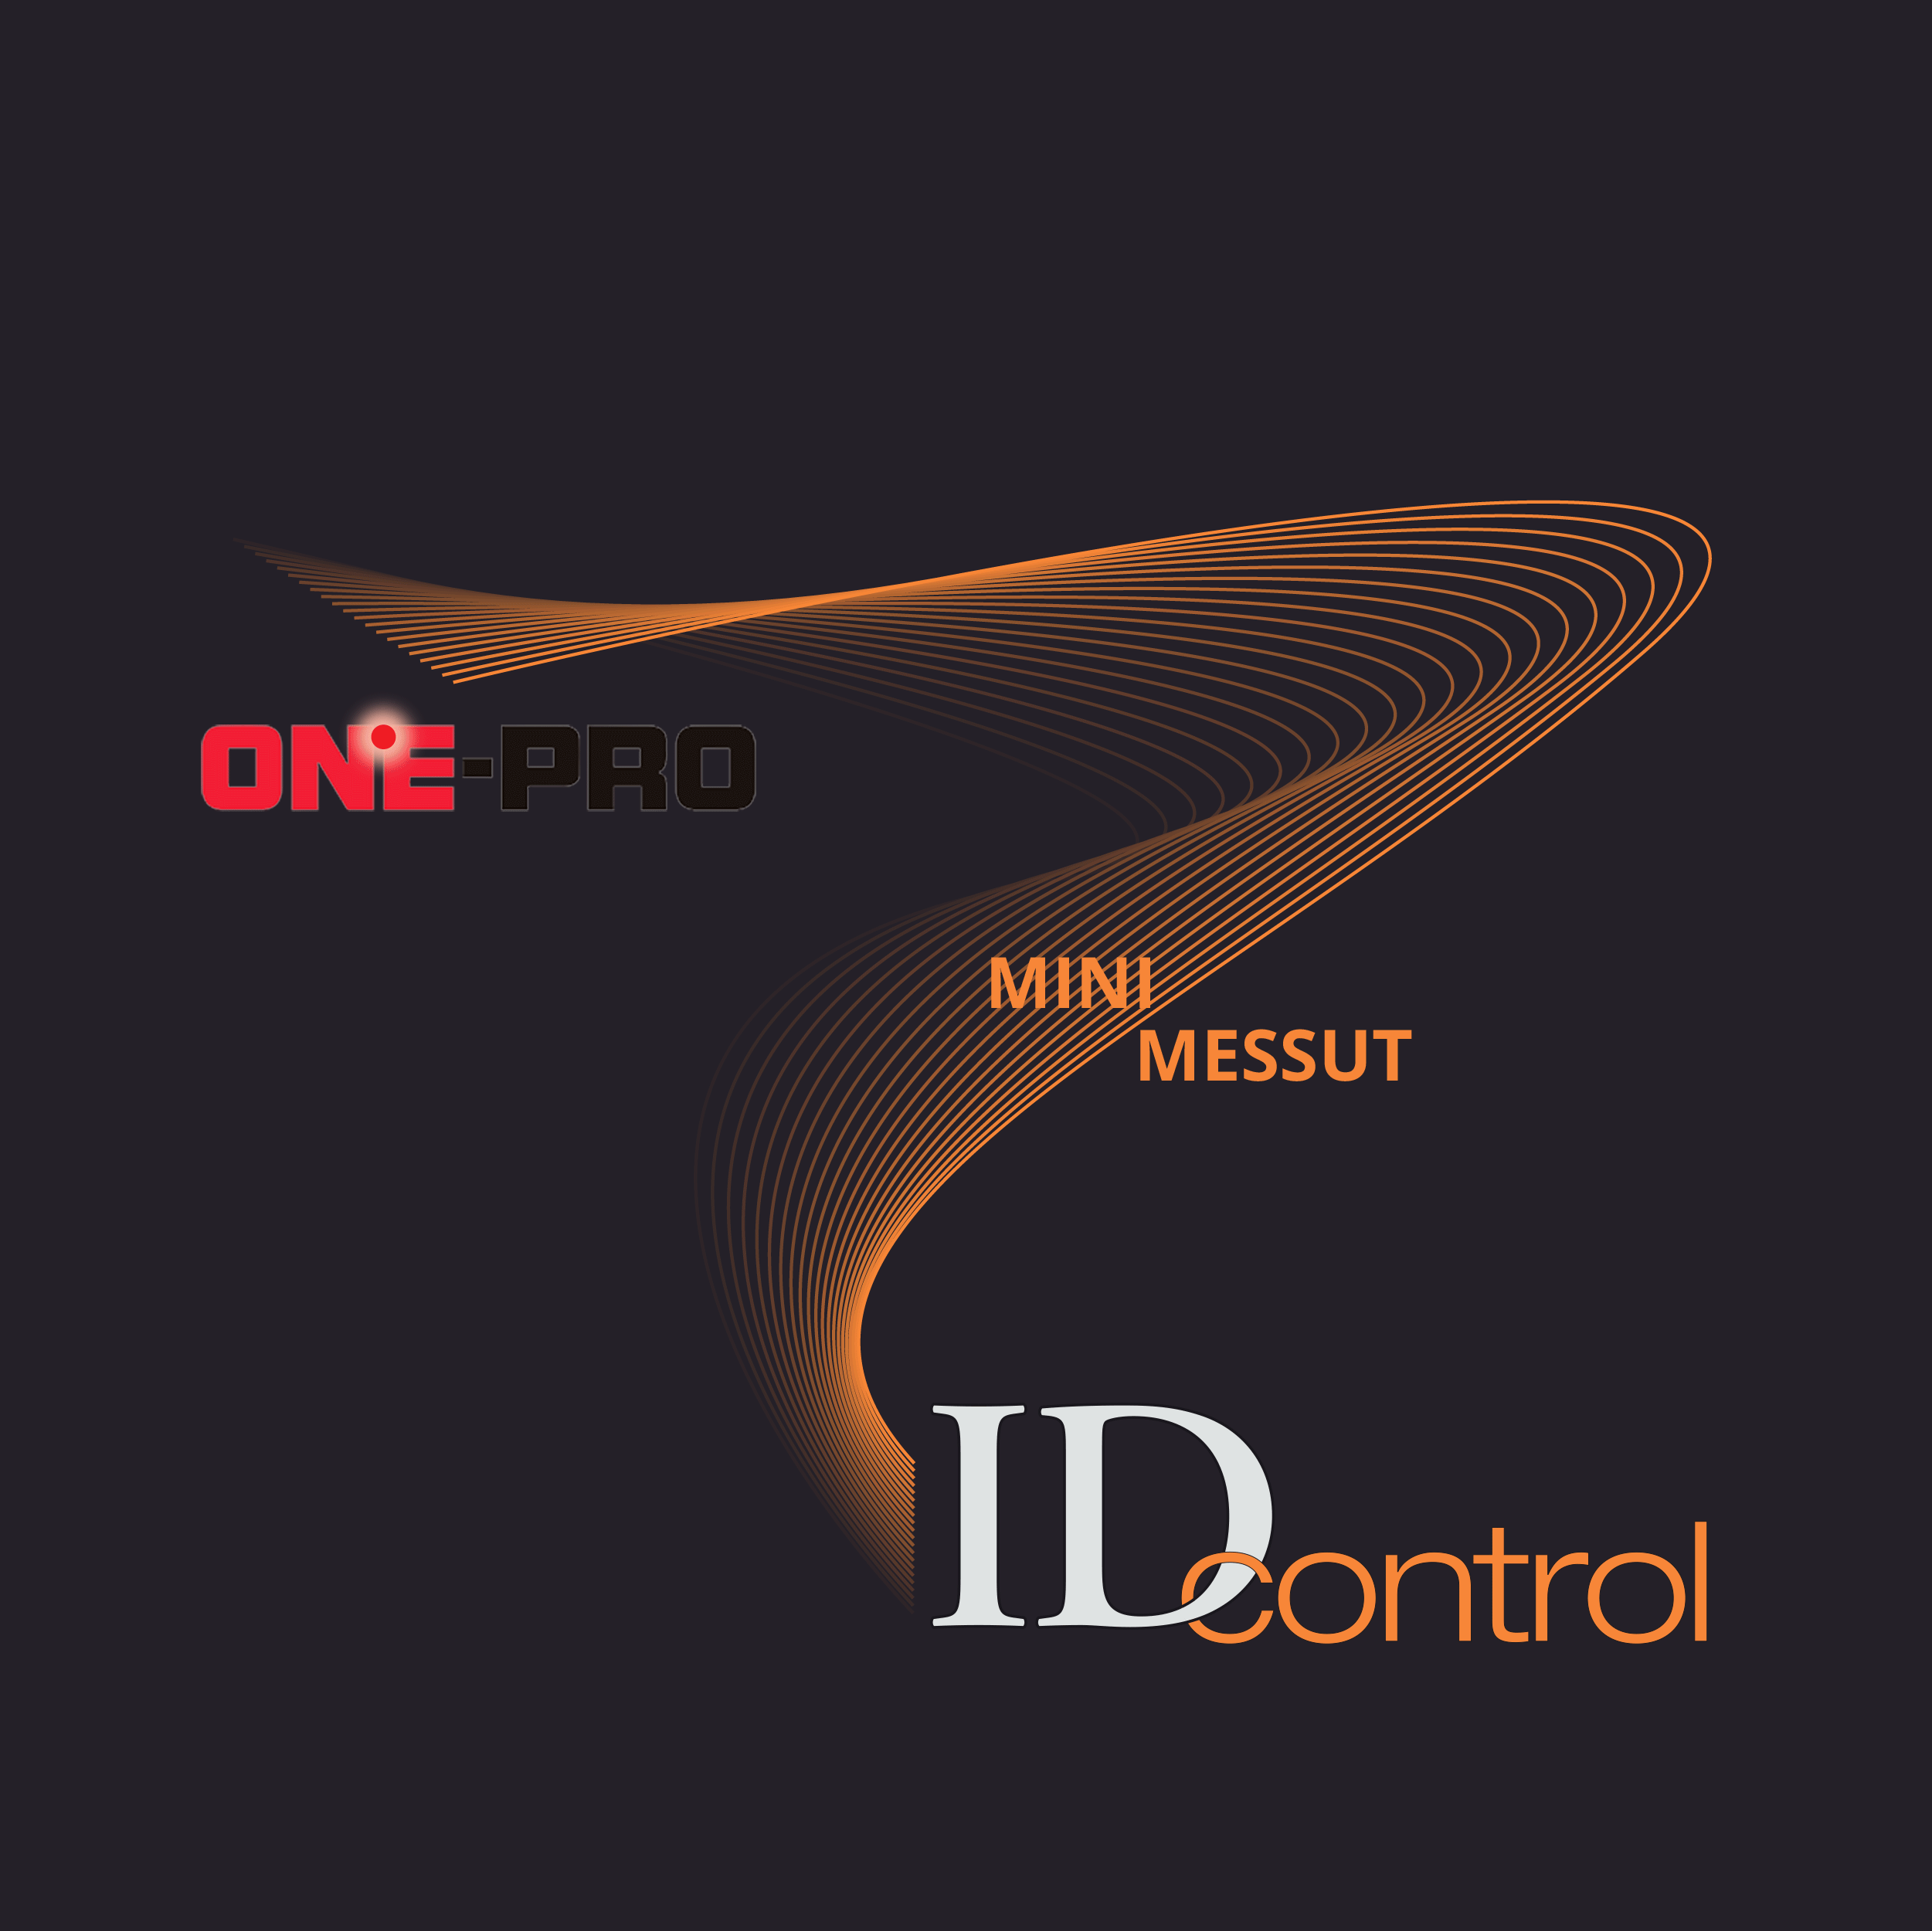 IDcontrol x OnePro showroom